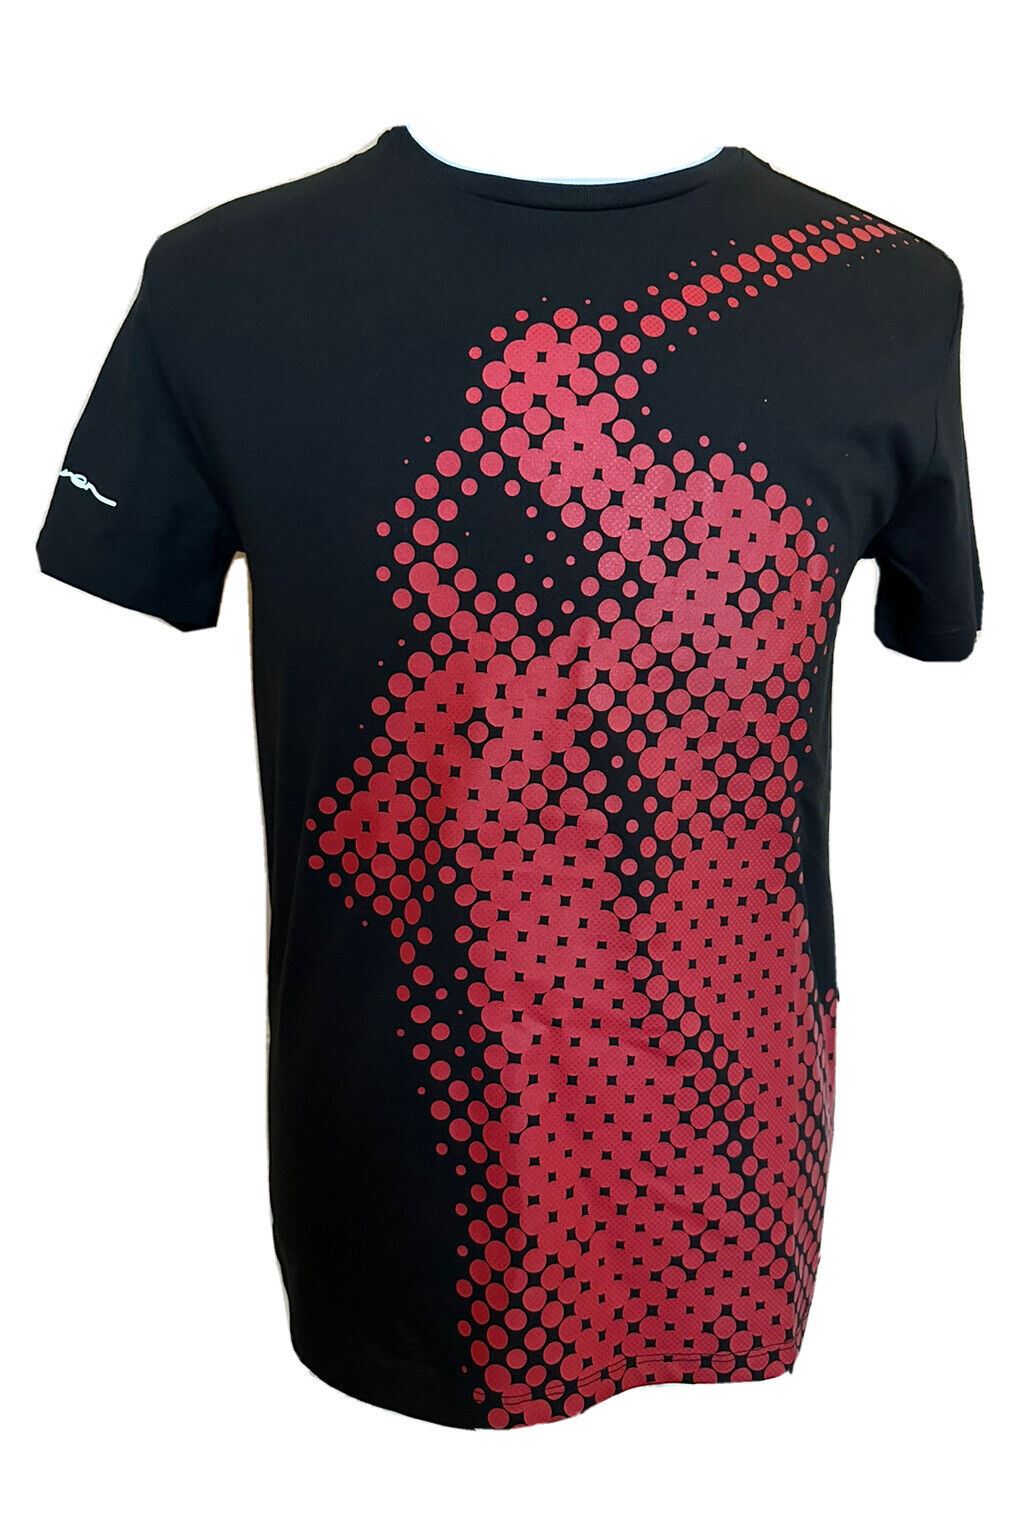 NWT $65 Polo Ralph Lauren Short Sleeve Logo T-shirt Black 2XL